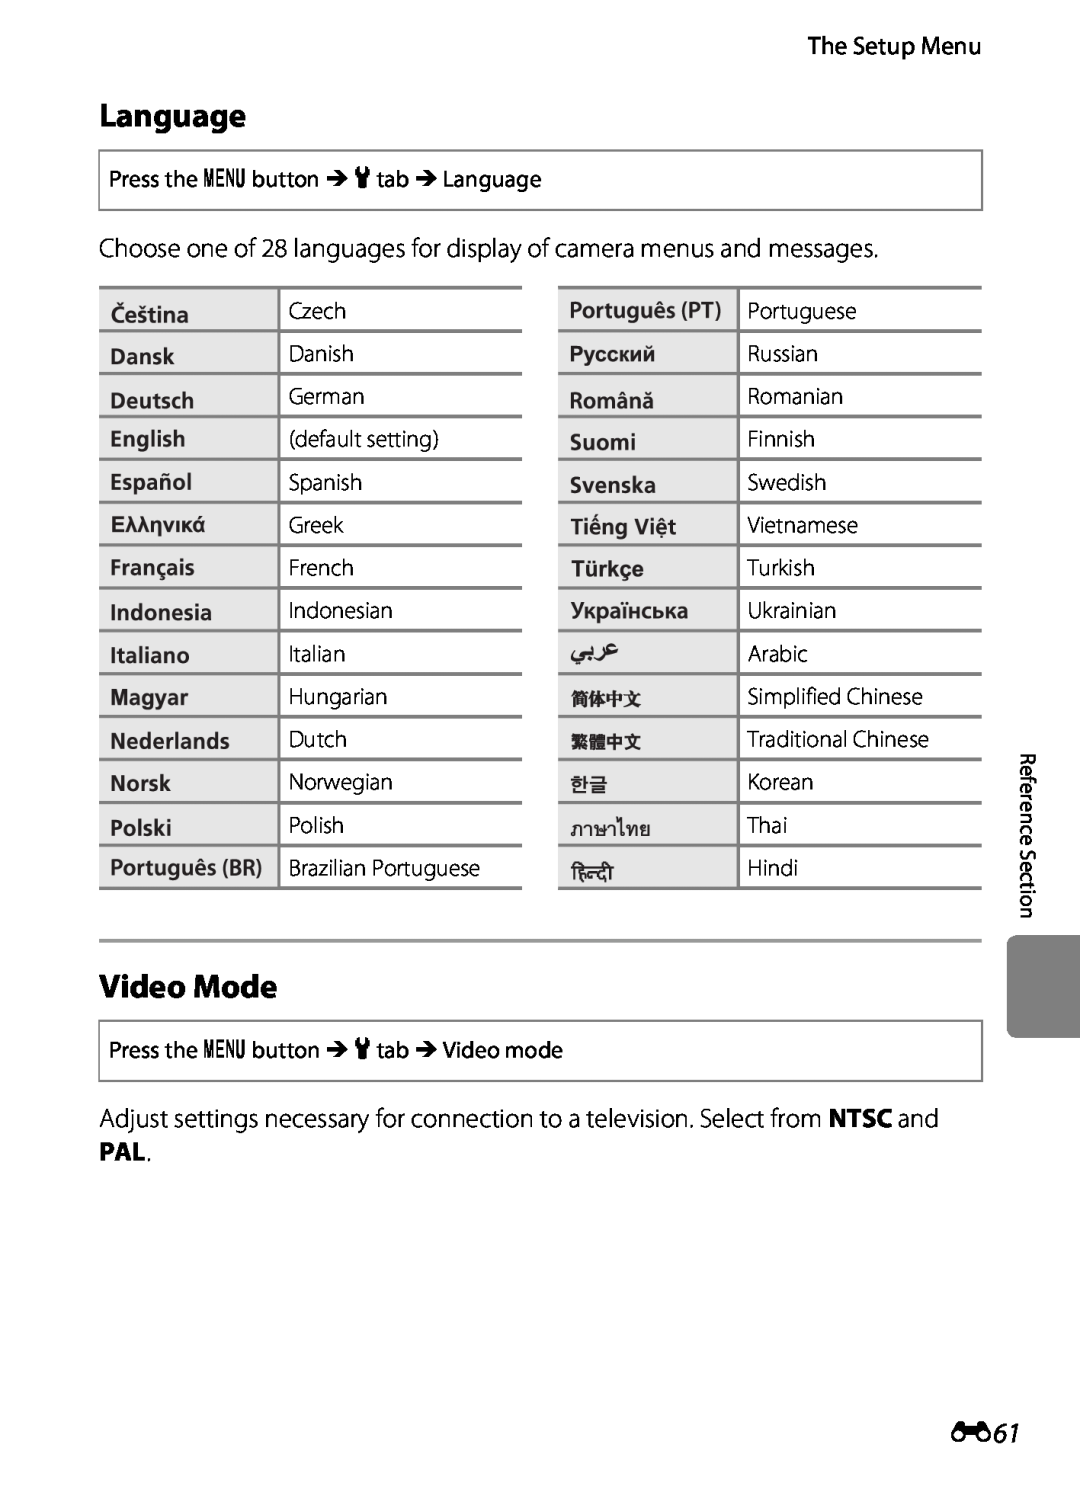 Nikon S2600 Language, Video Mode, Choose one of 28 languages for display of camera menus and messages, The Setup Menu 